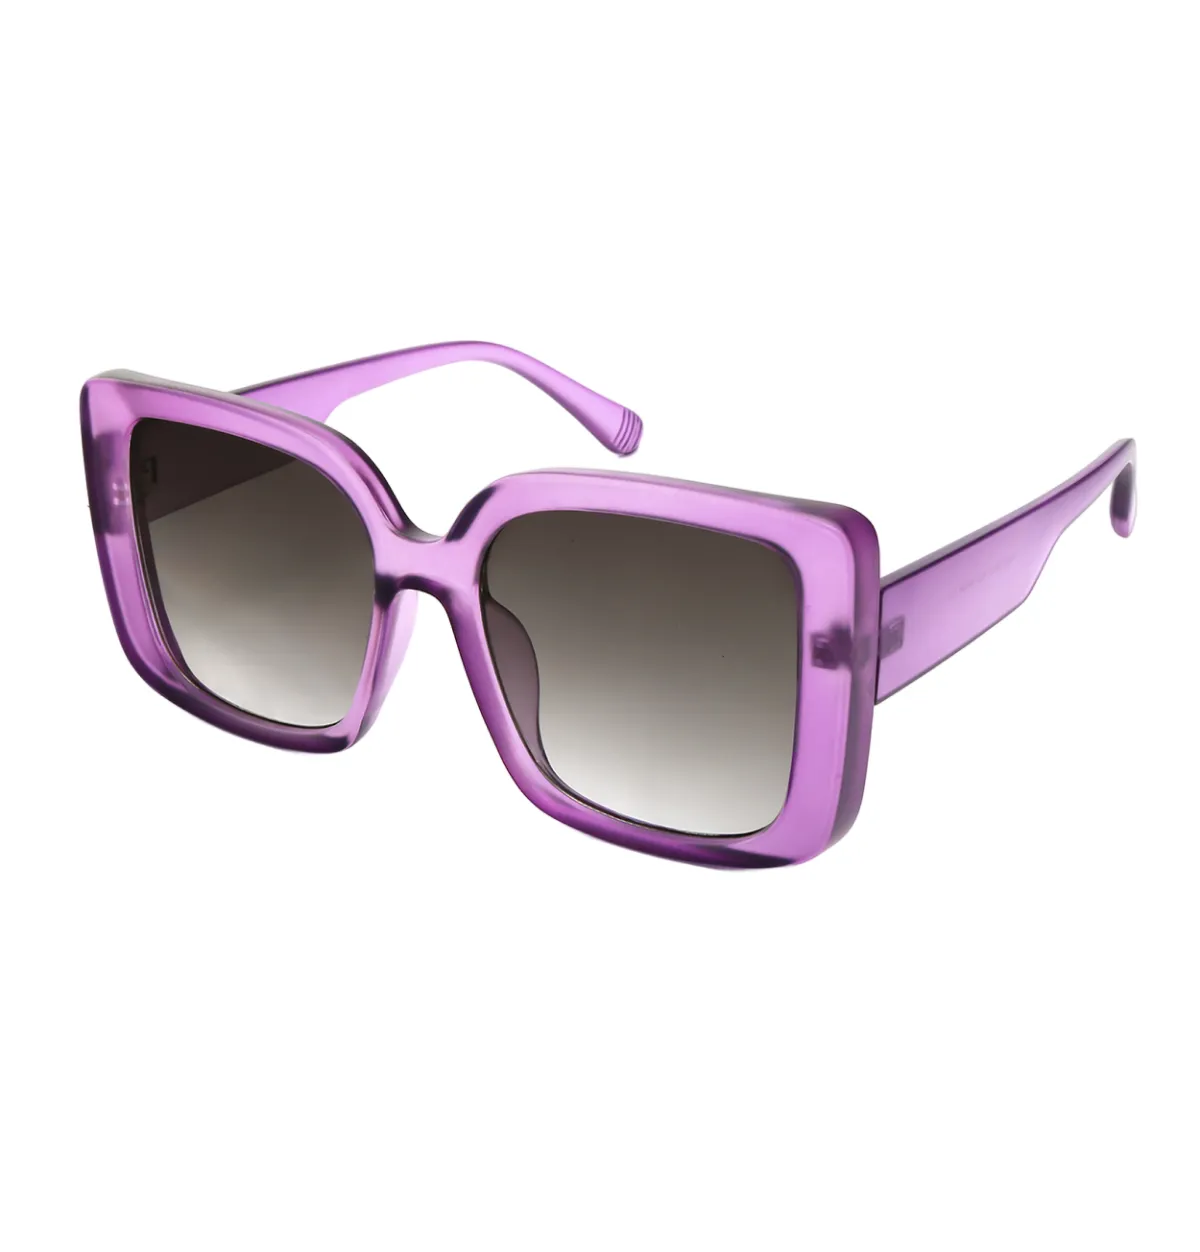 Aspasia - Square Frosted Purple Transpartent Sunglasses for Women